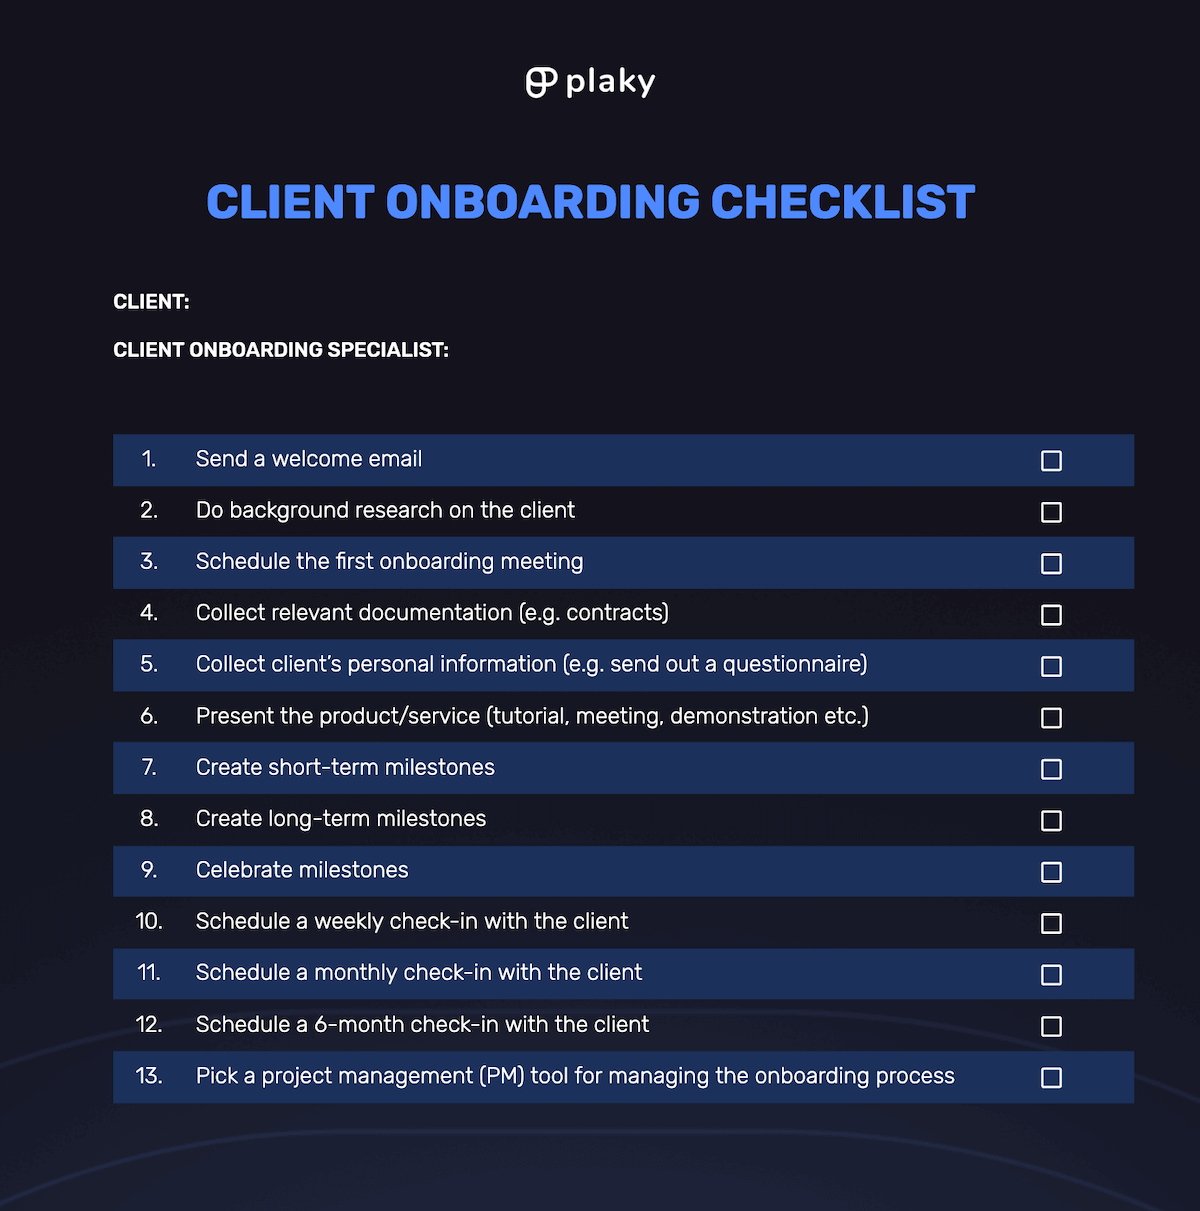 Client onboarding checklist